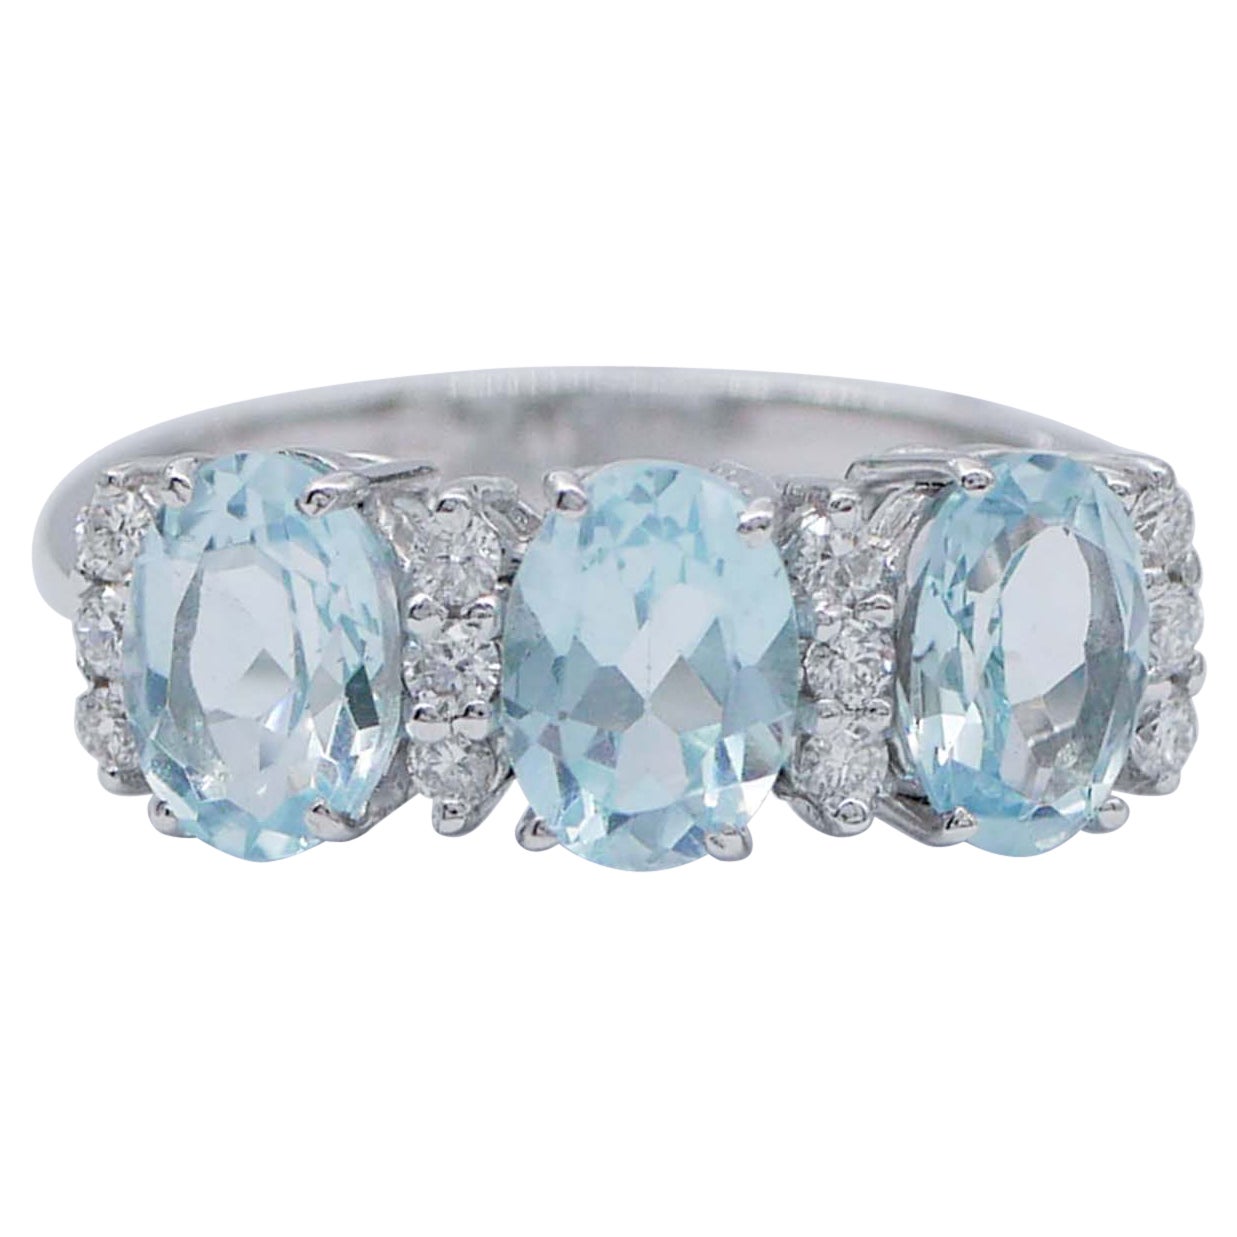 Aquamarine, Diamonds, 18 Karat White Gold Ring